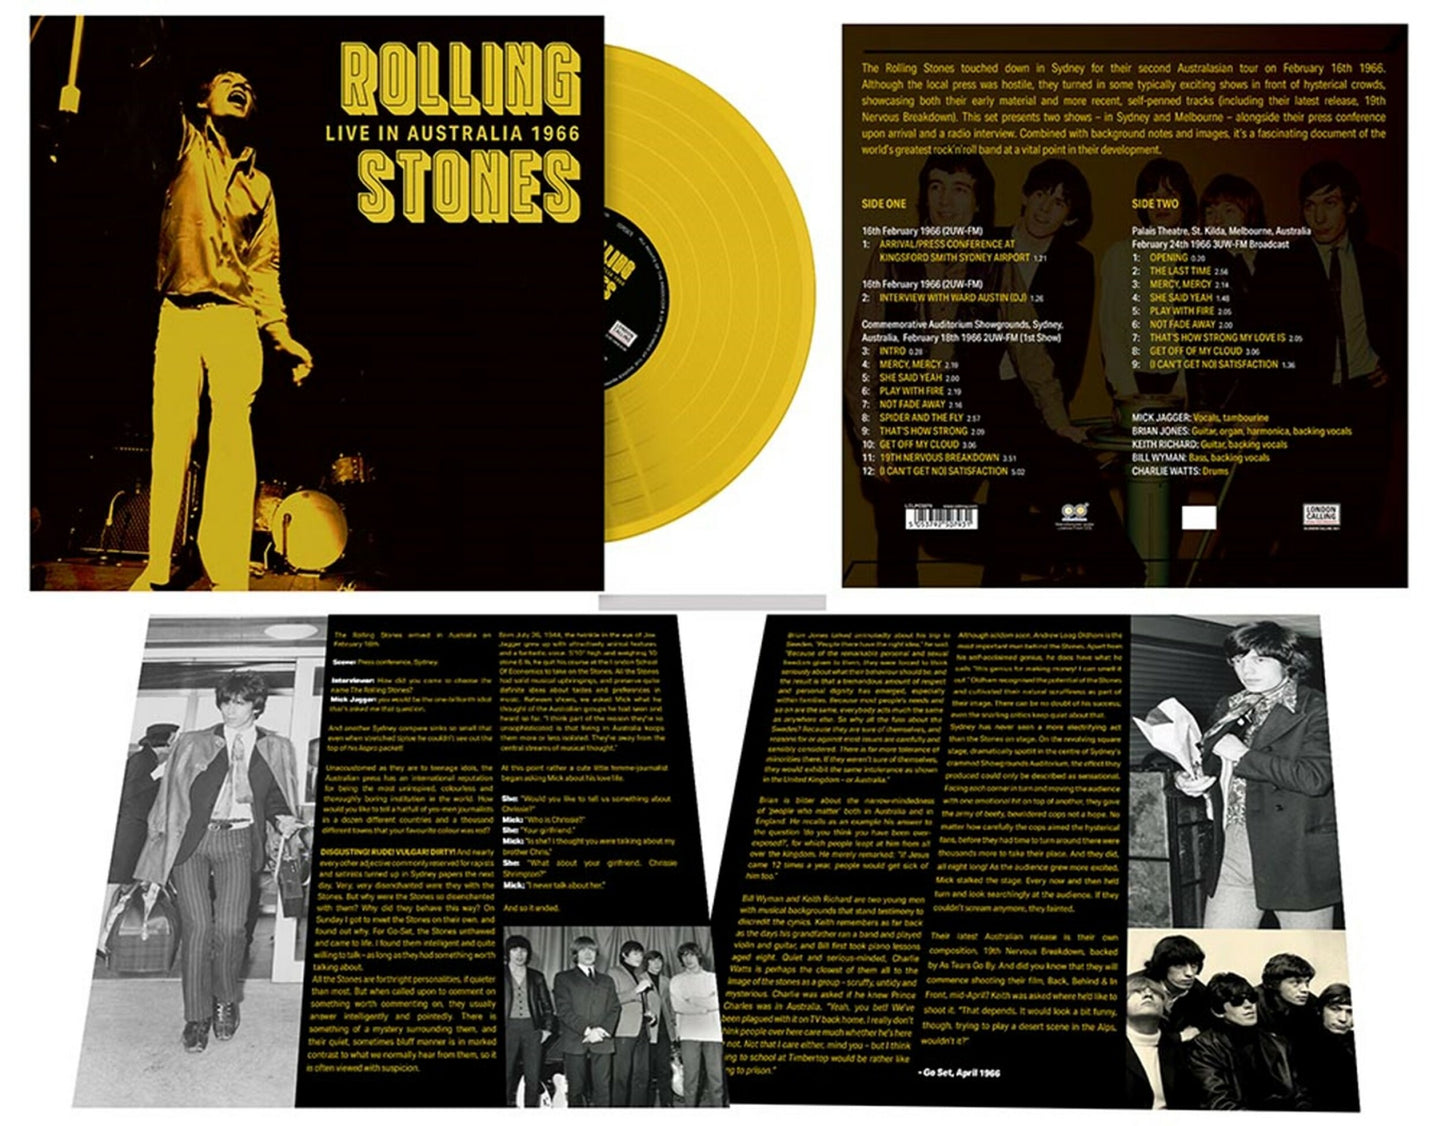 Rolling Stones - Live in Australia 1966 (Coloured) - LP